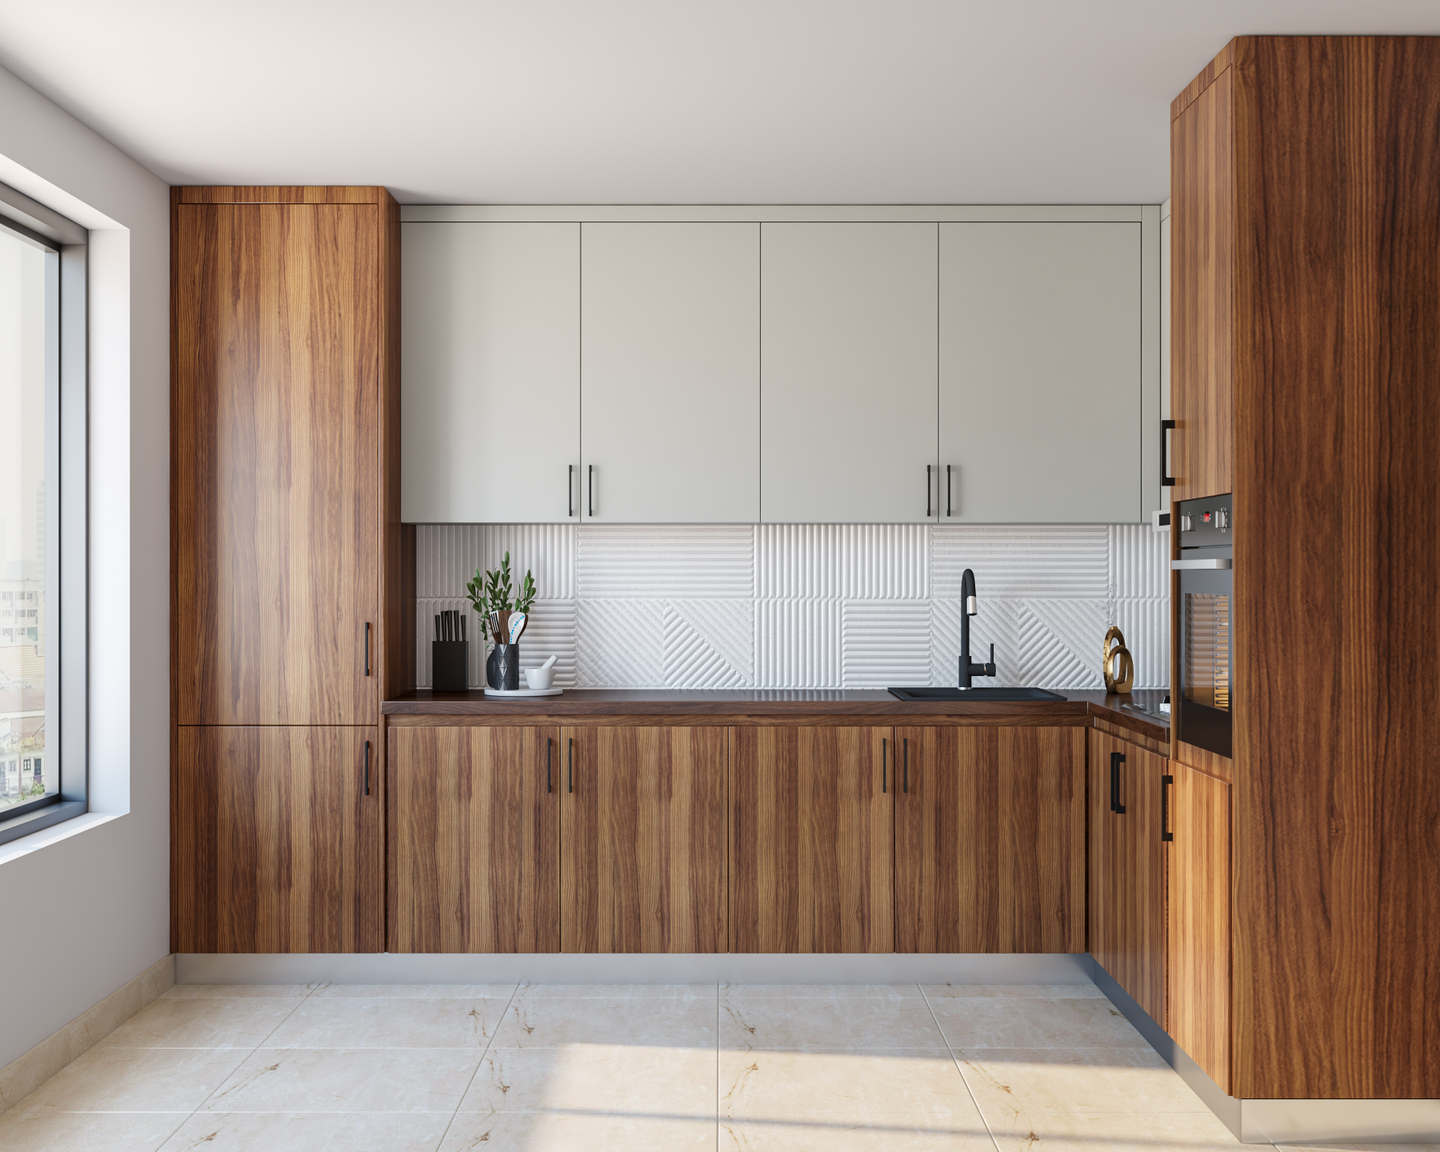 Wood and White Kitchen Designs - Livspace